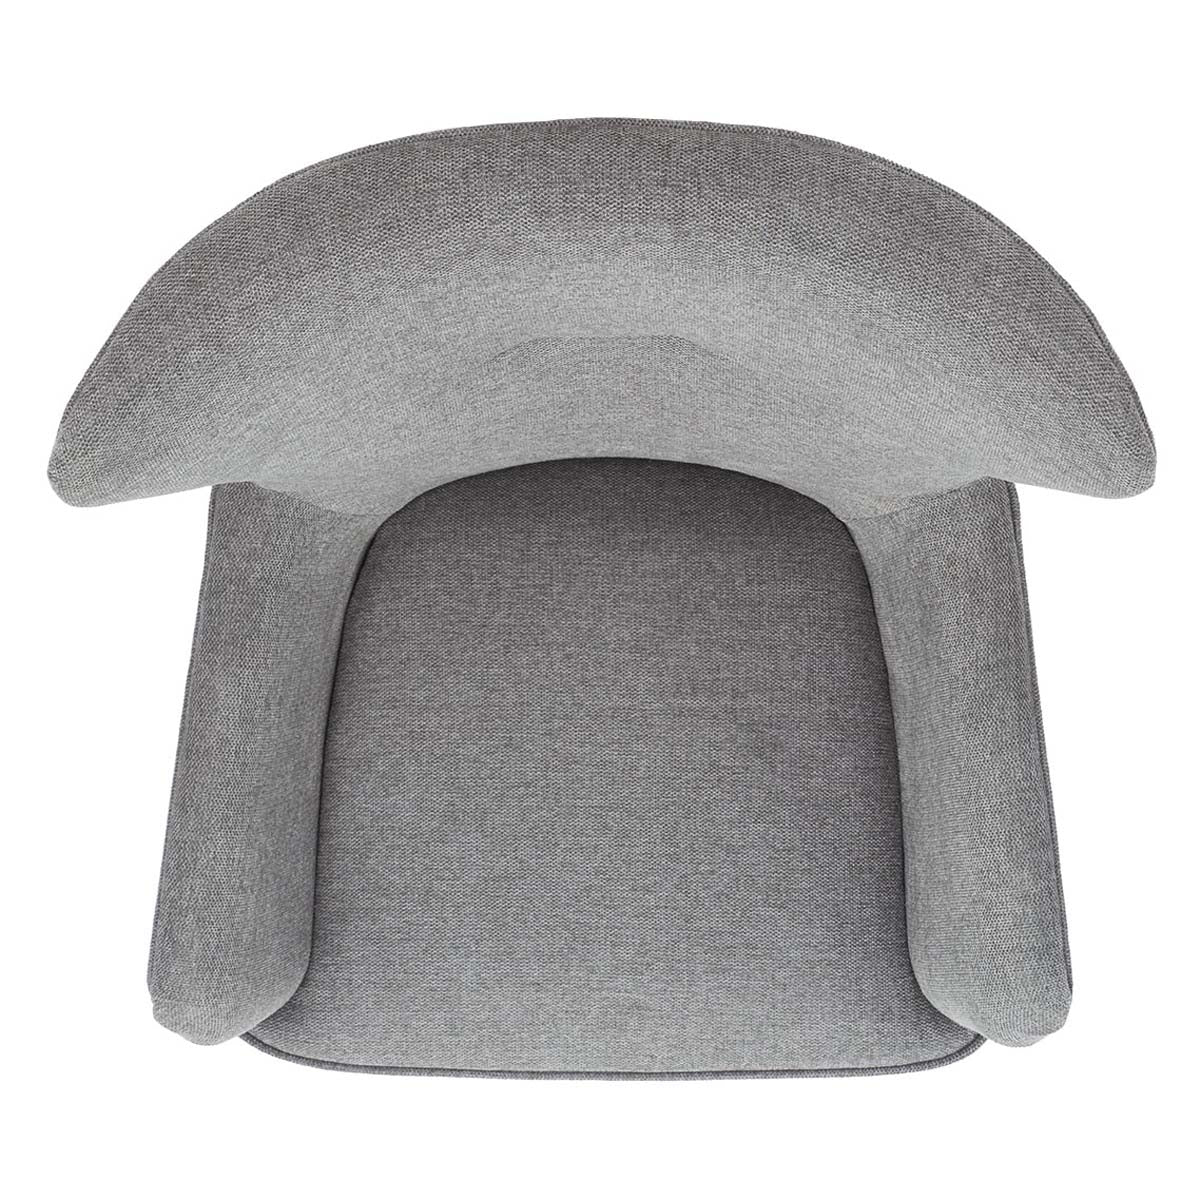 Safavieh Geonna Upholstered Arm Chair , ACH5107 - Medium Grey / Black